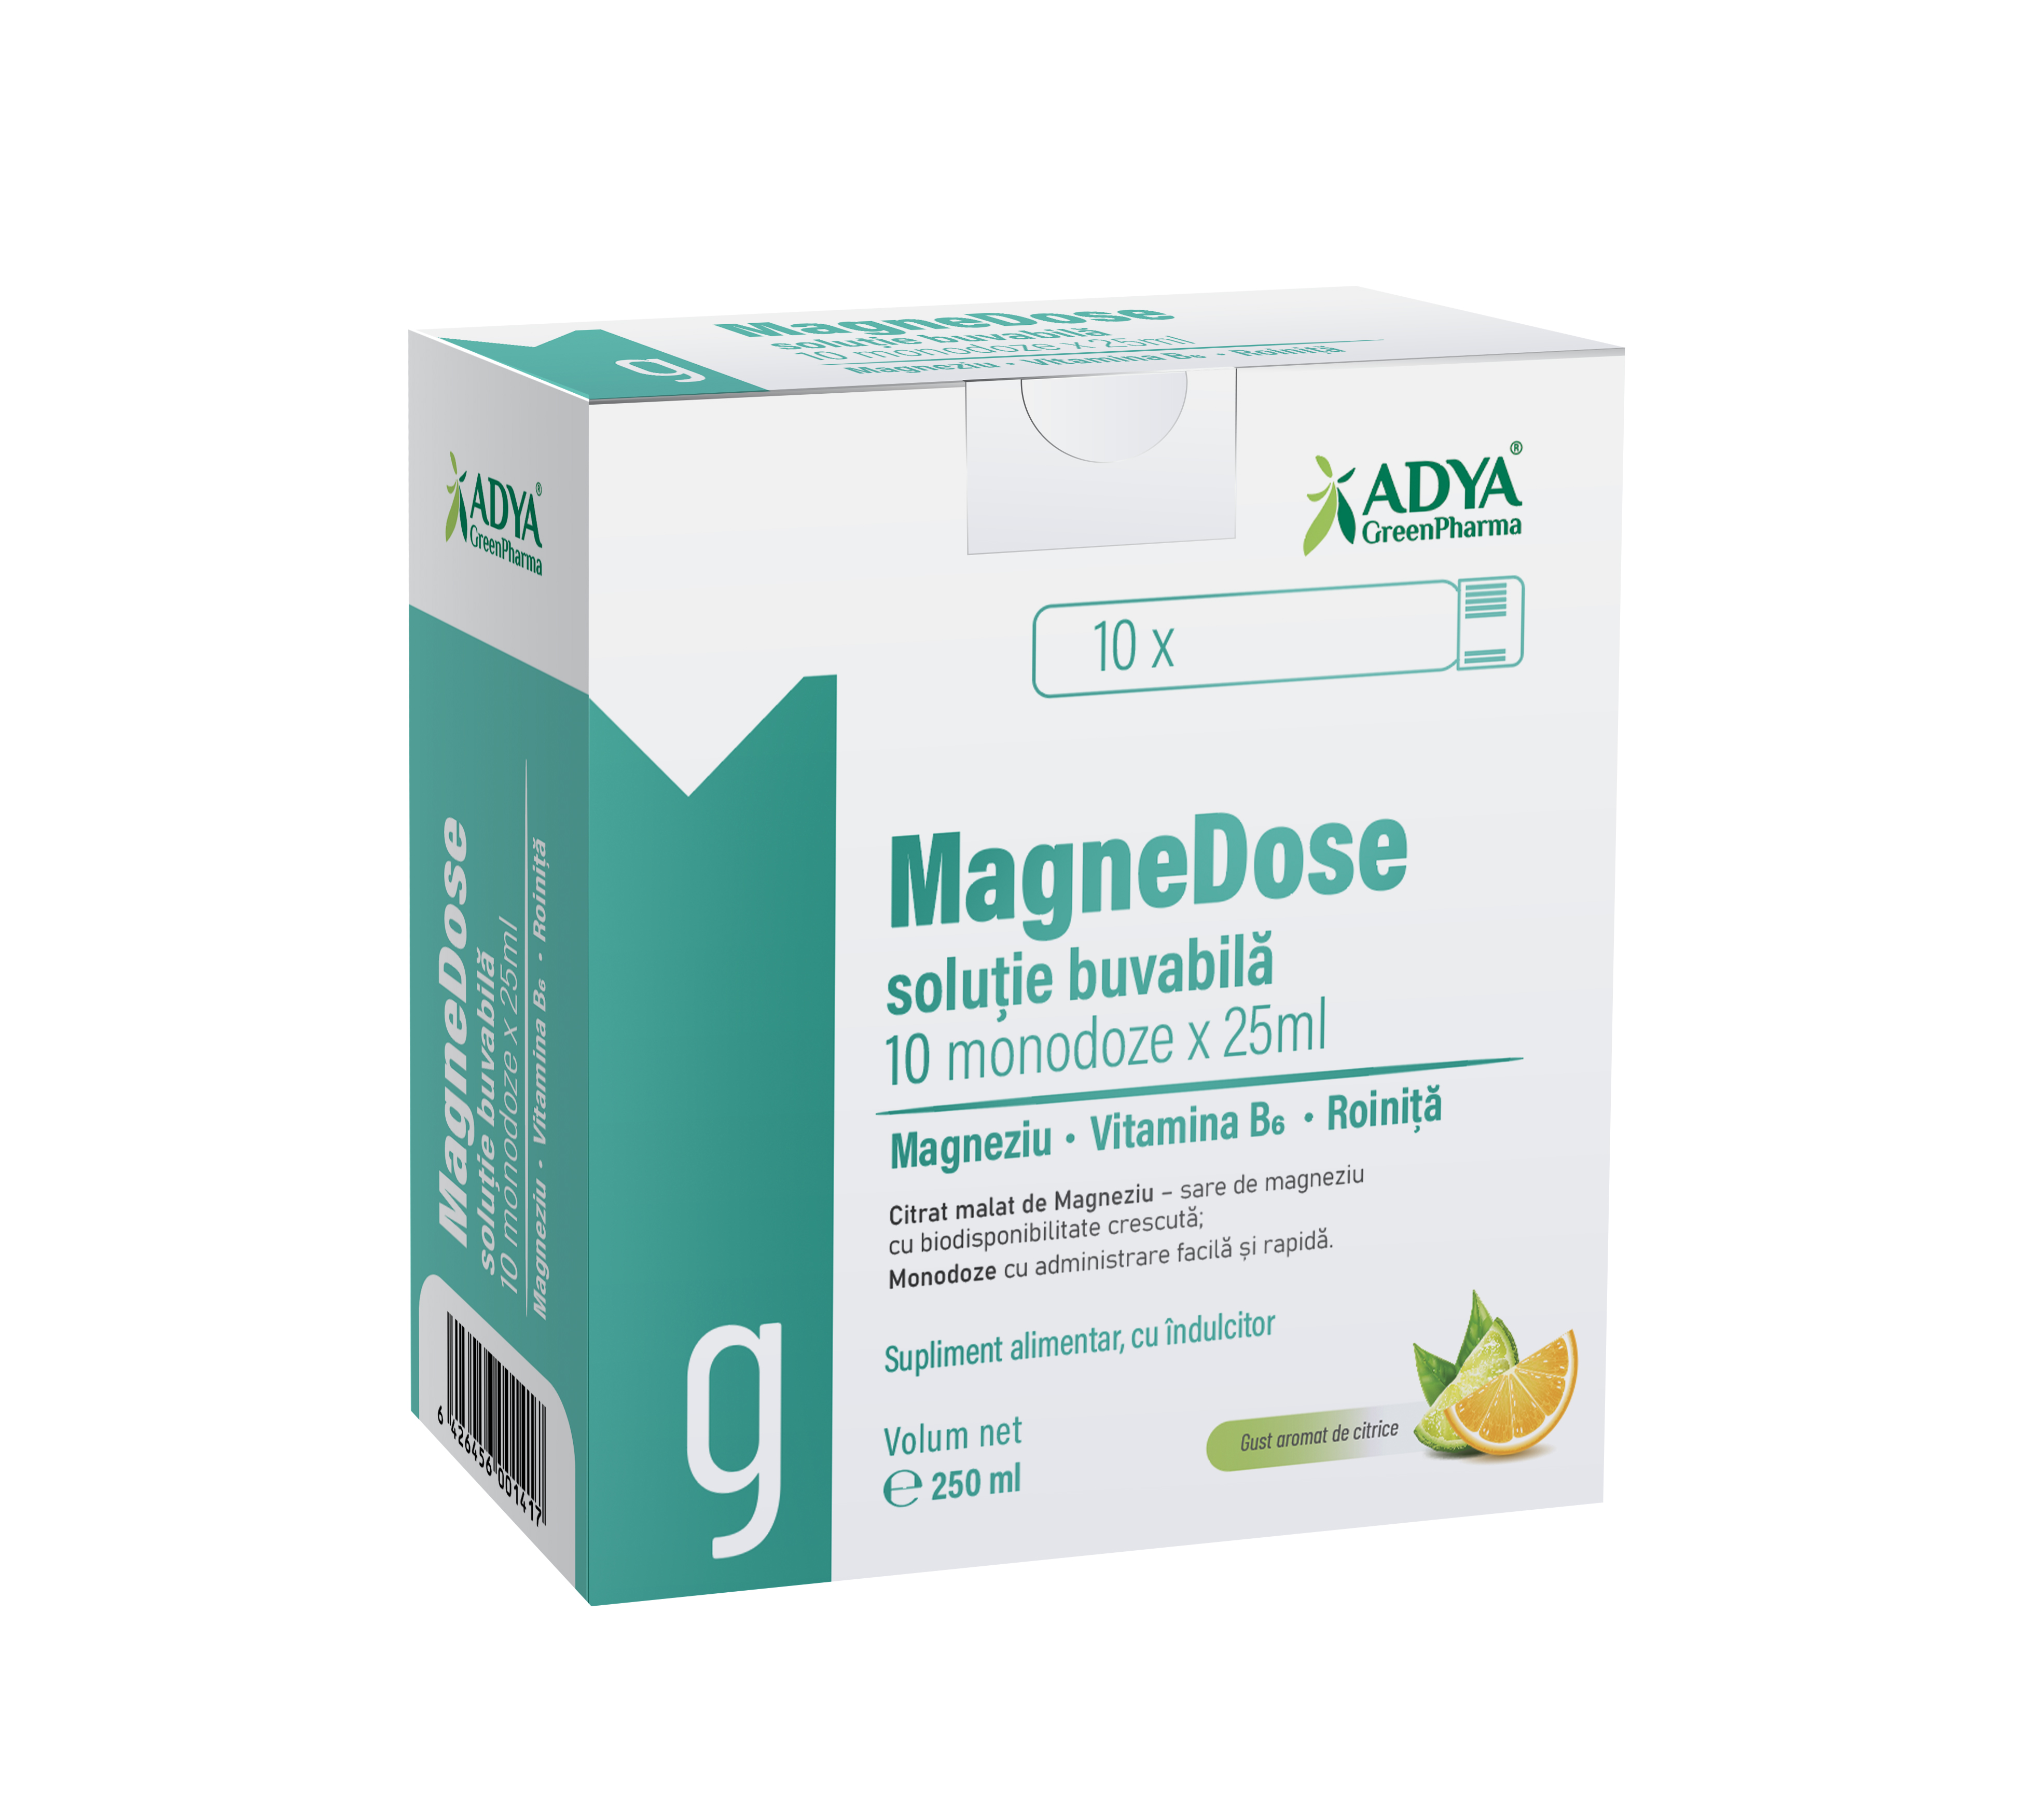 Uz general - MagneDose, soluție buvabilă, 10 monodose x 25ml, Adya Green Pharma, sinapis.ro